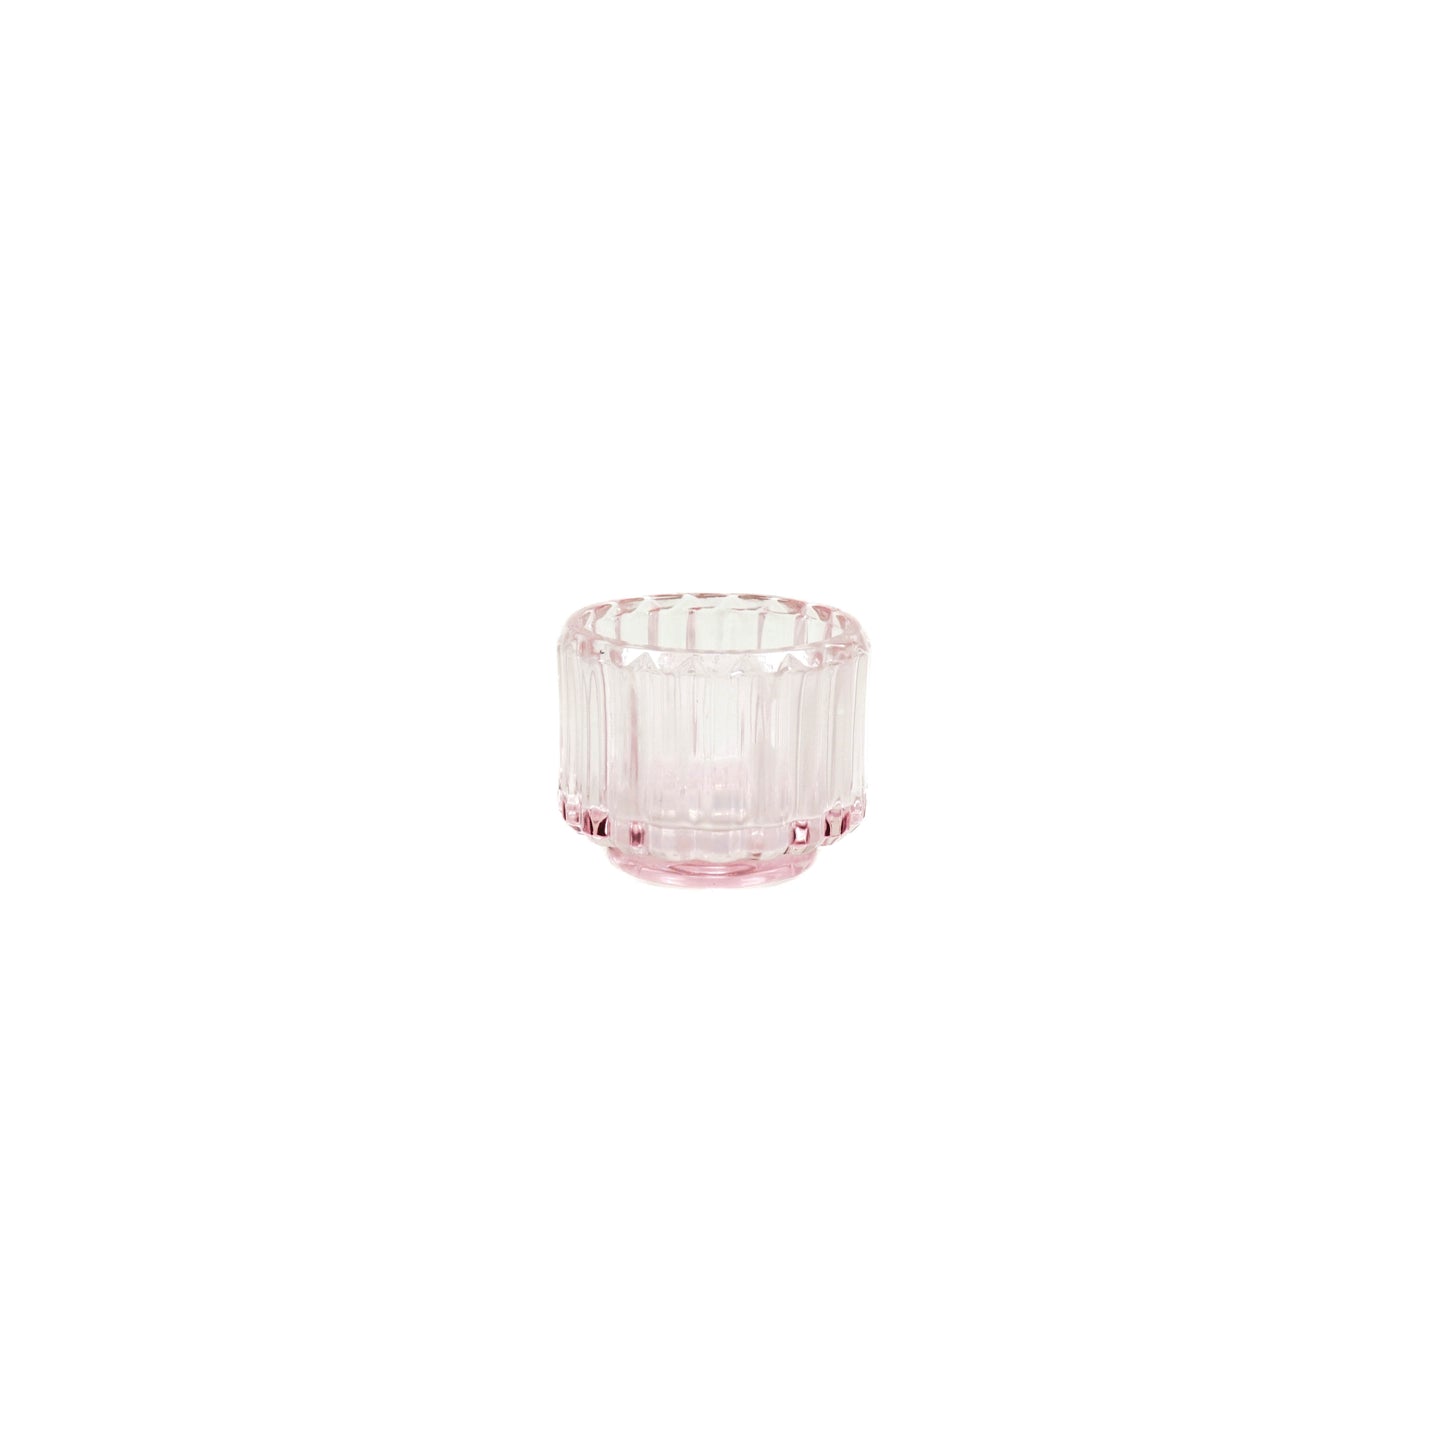 HV Glass Tealightholder Candleholder - Pink - 8x6.5cm